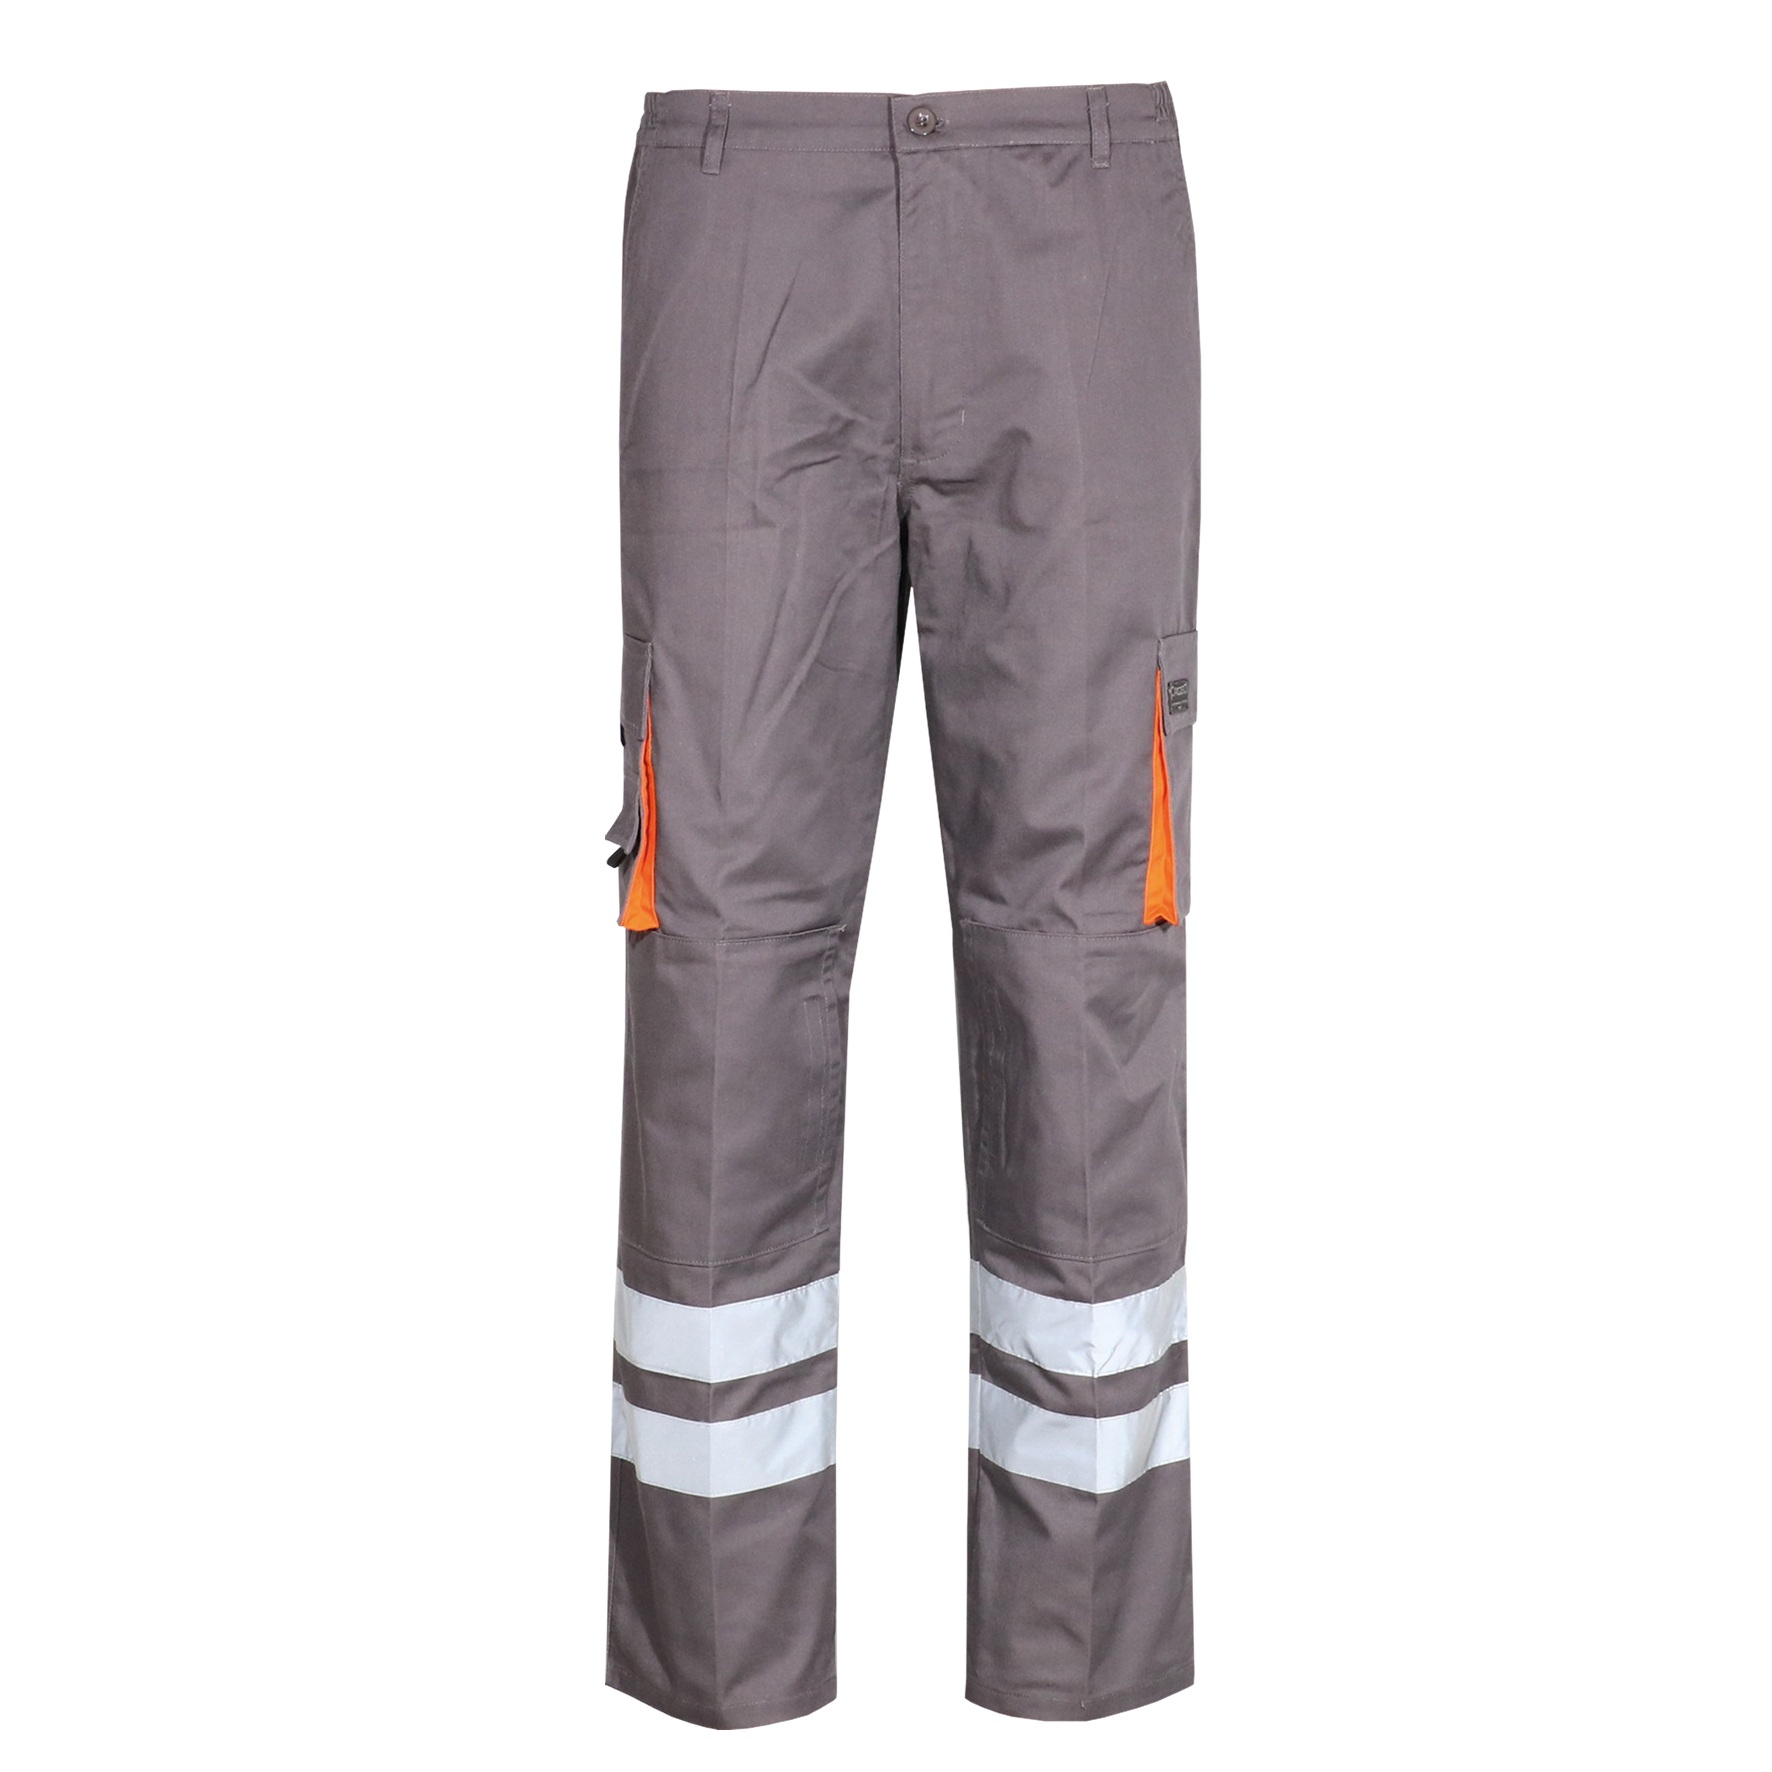 FAGEO Παντελόνι εργασίας γκρι/πορτοκαλί, σειρά 507RT